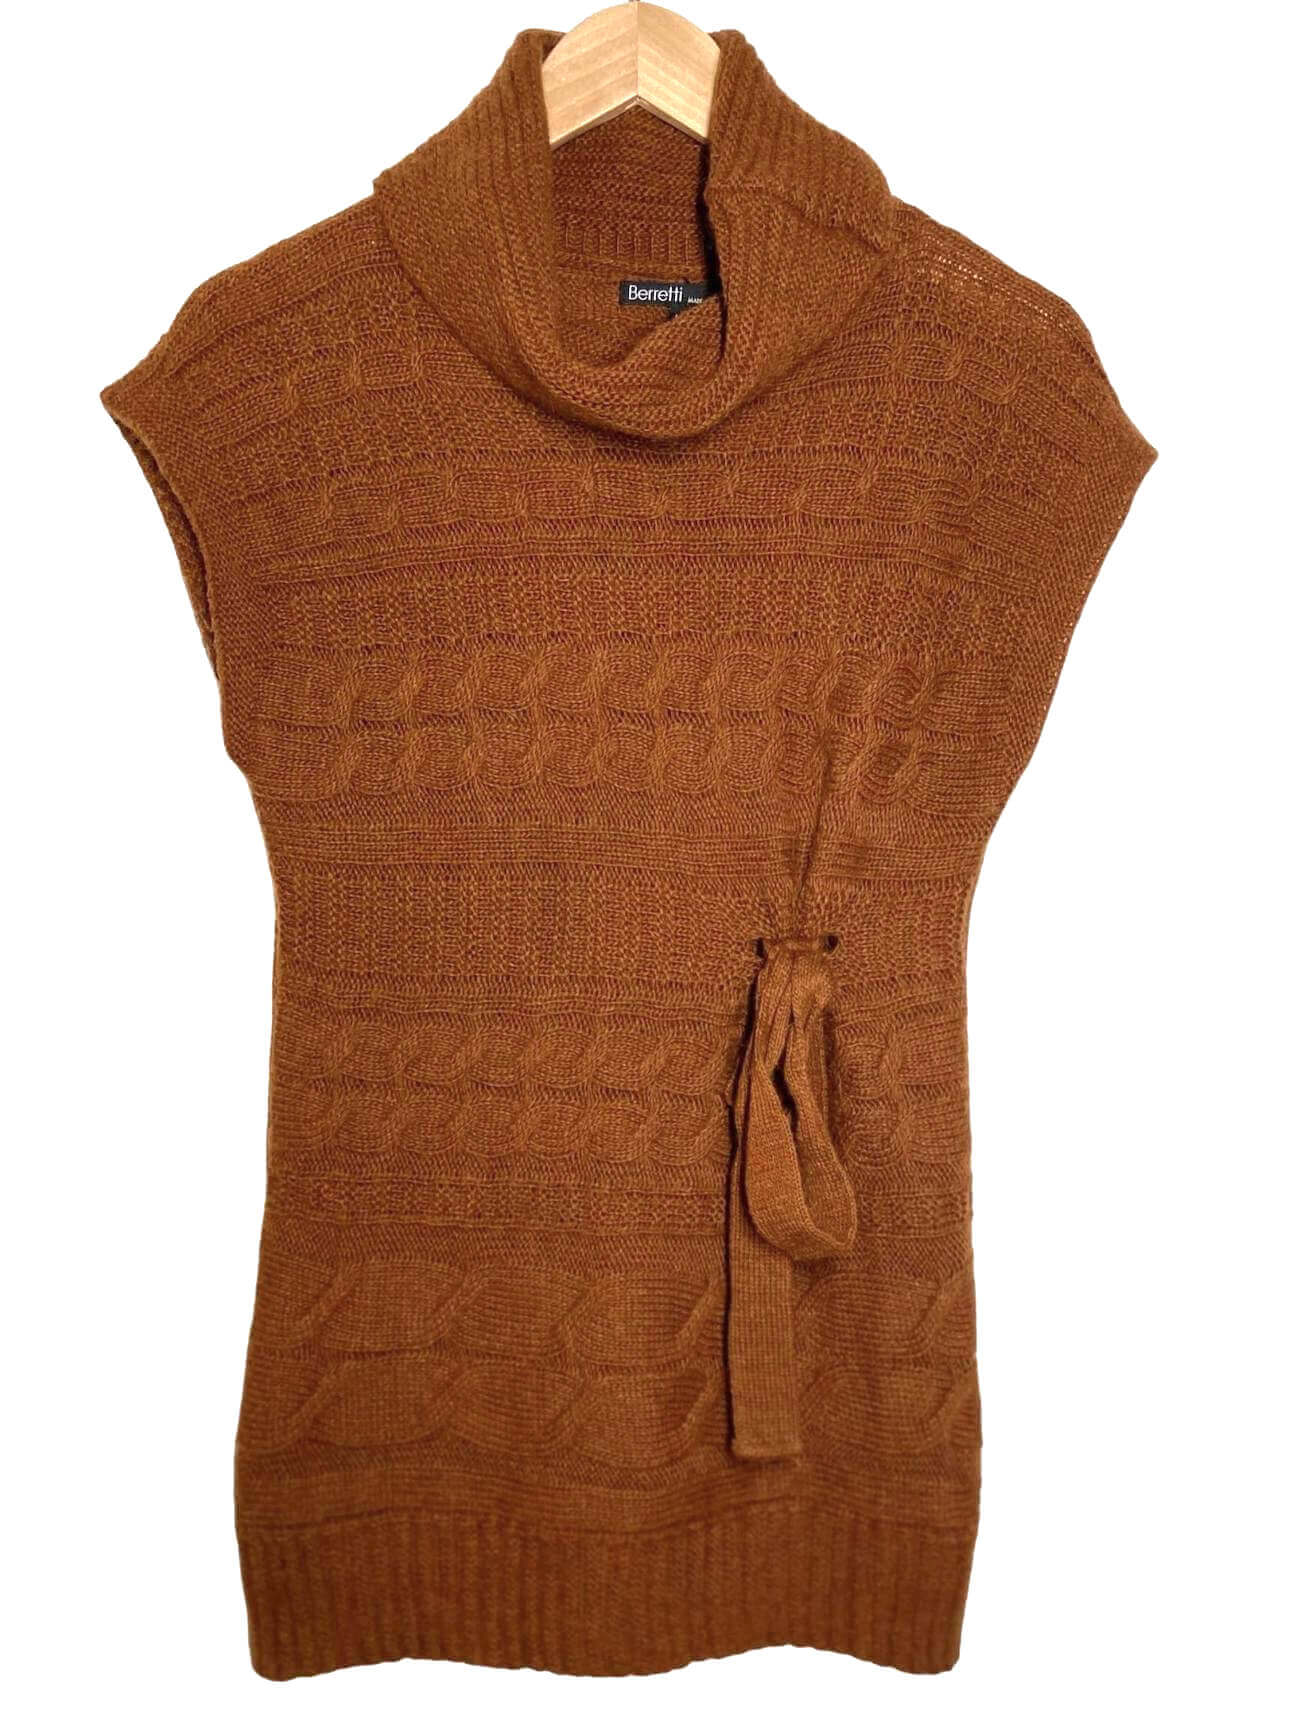 Warm Spring BERRETTI cable knit sleeveless sweater tunic